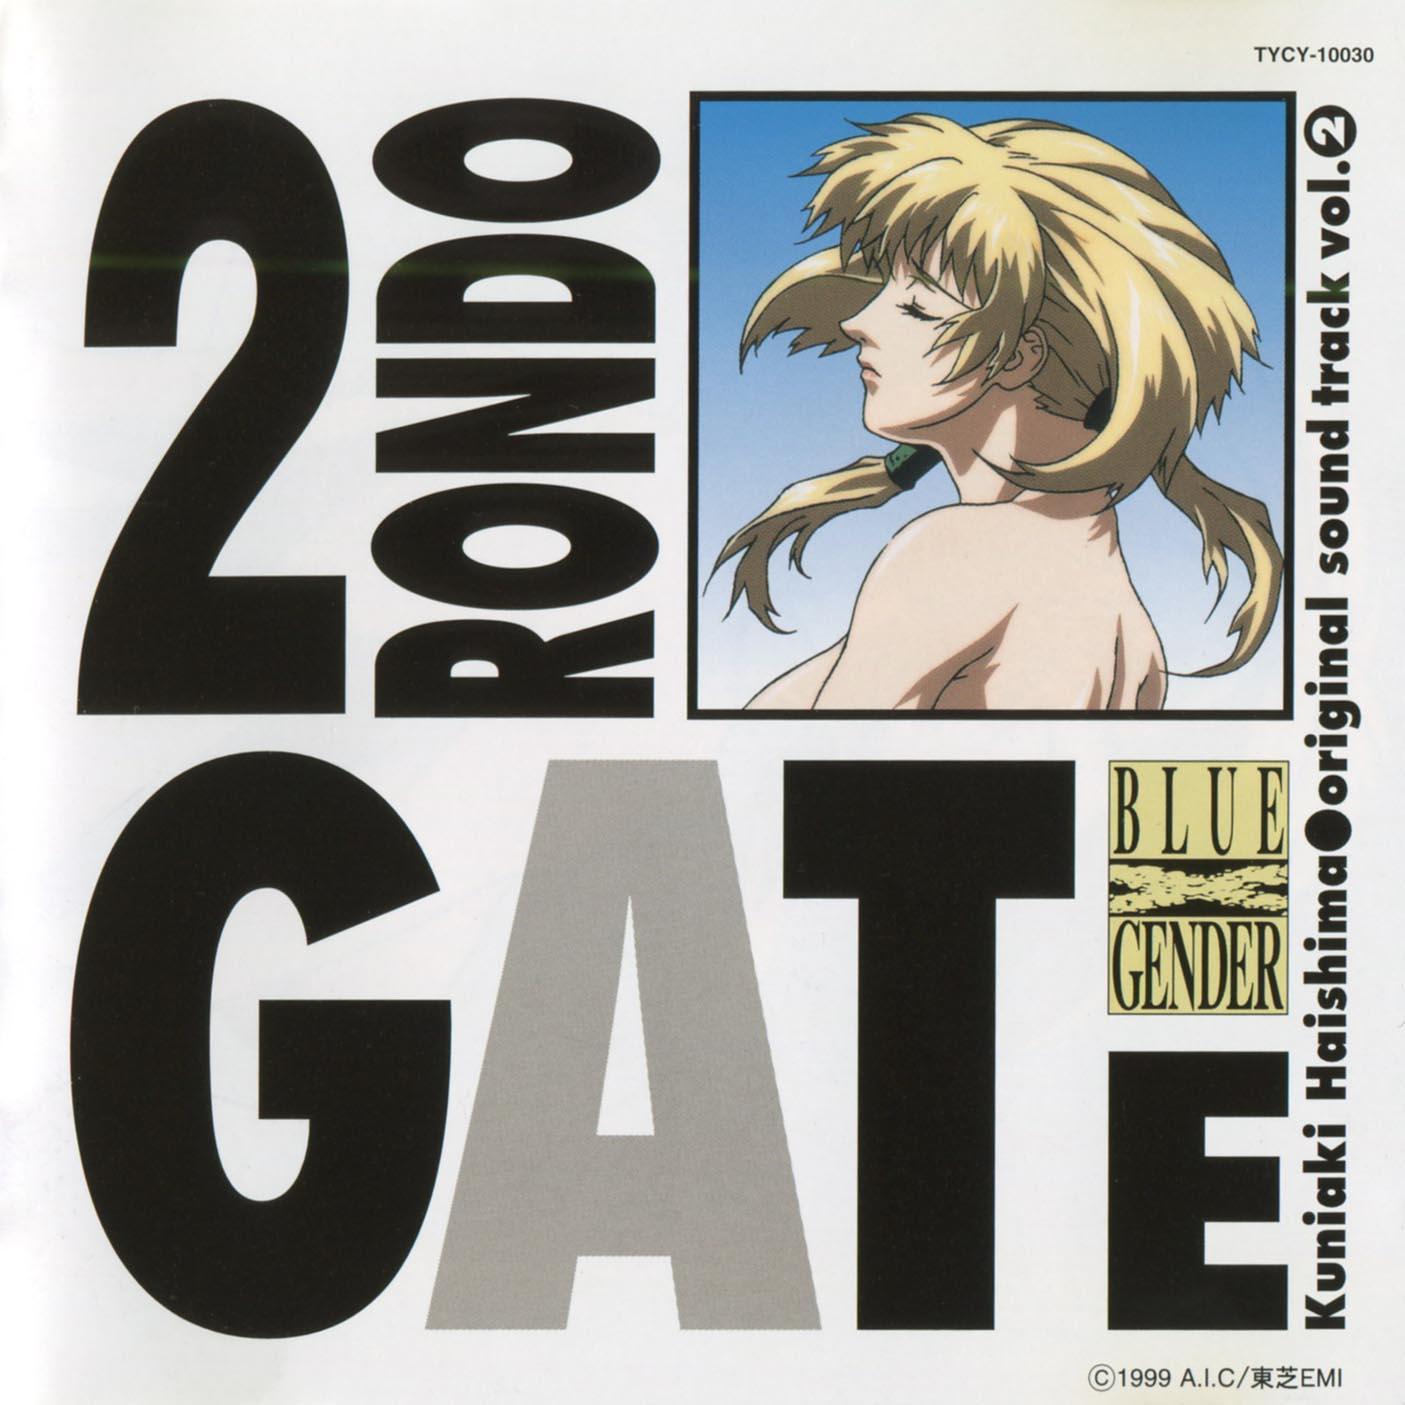 Blue Gender Original Soundtrack Vol.2: Rondo Gate